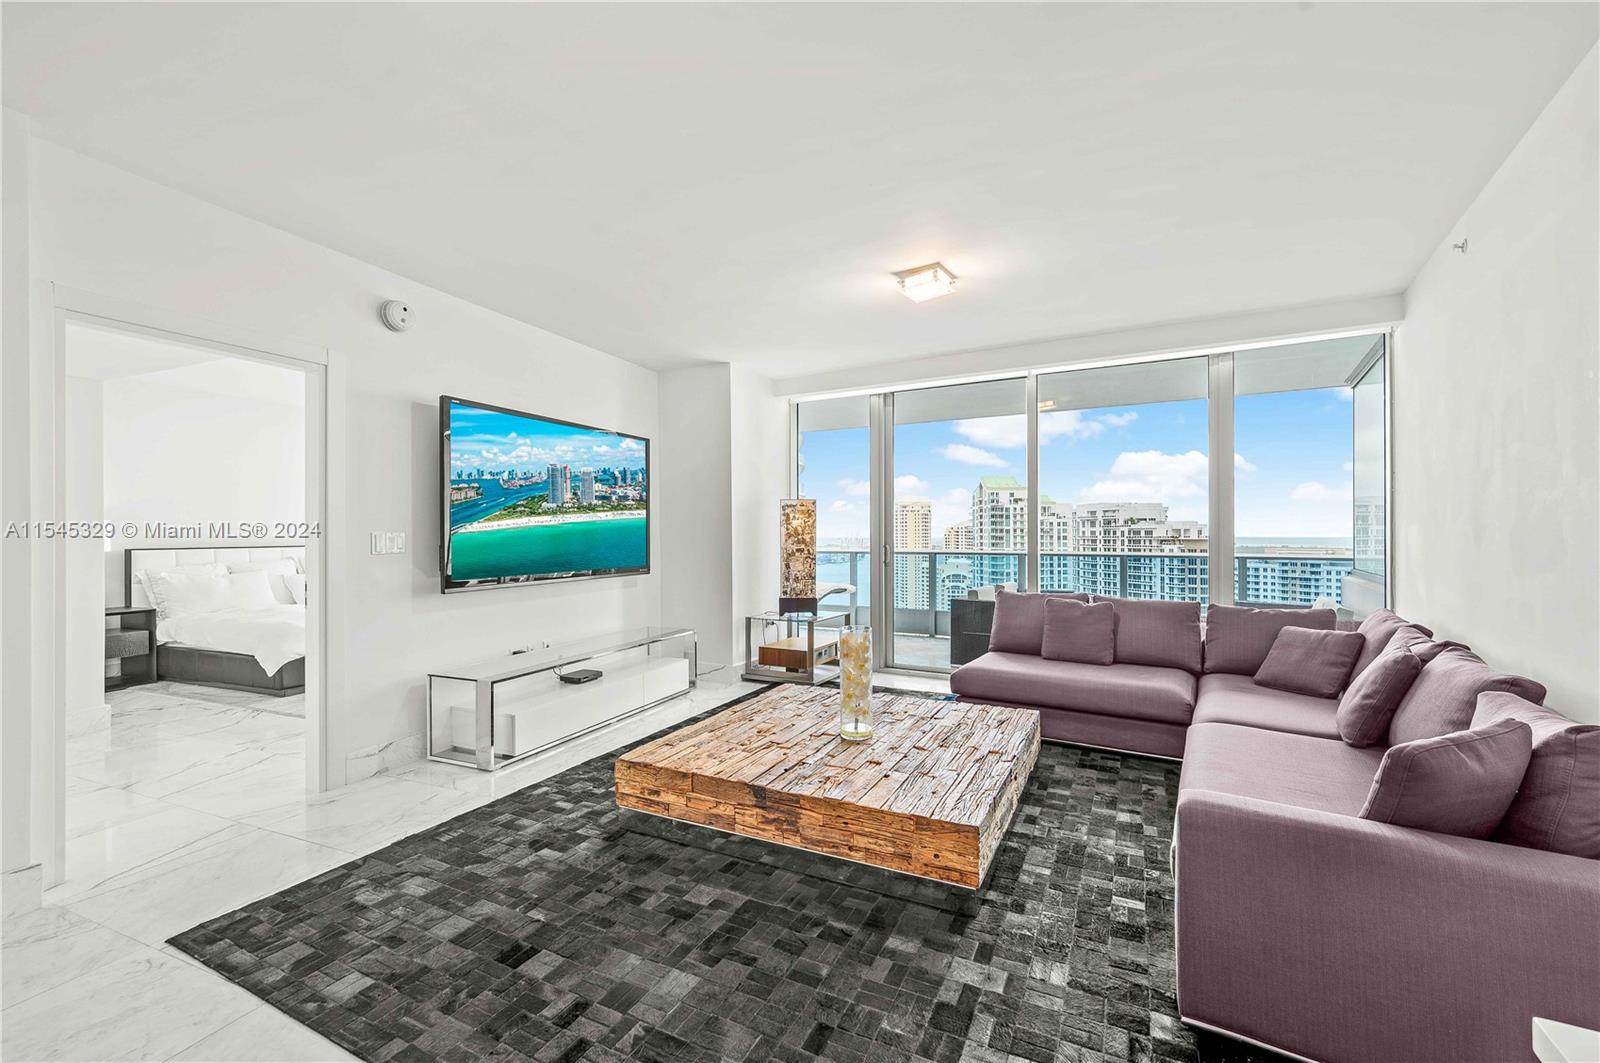 Property for Sale at 200 Biscayne Boulevard Way 3805, Miami, Broward County, Florida - Bedrooms: 1 
Bathrooms: 2  - $680,000